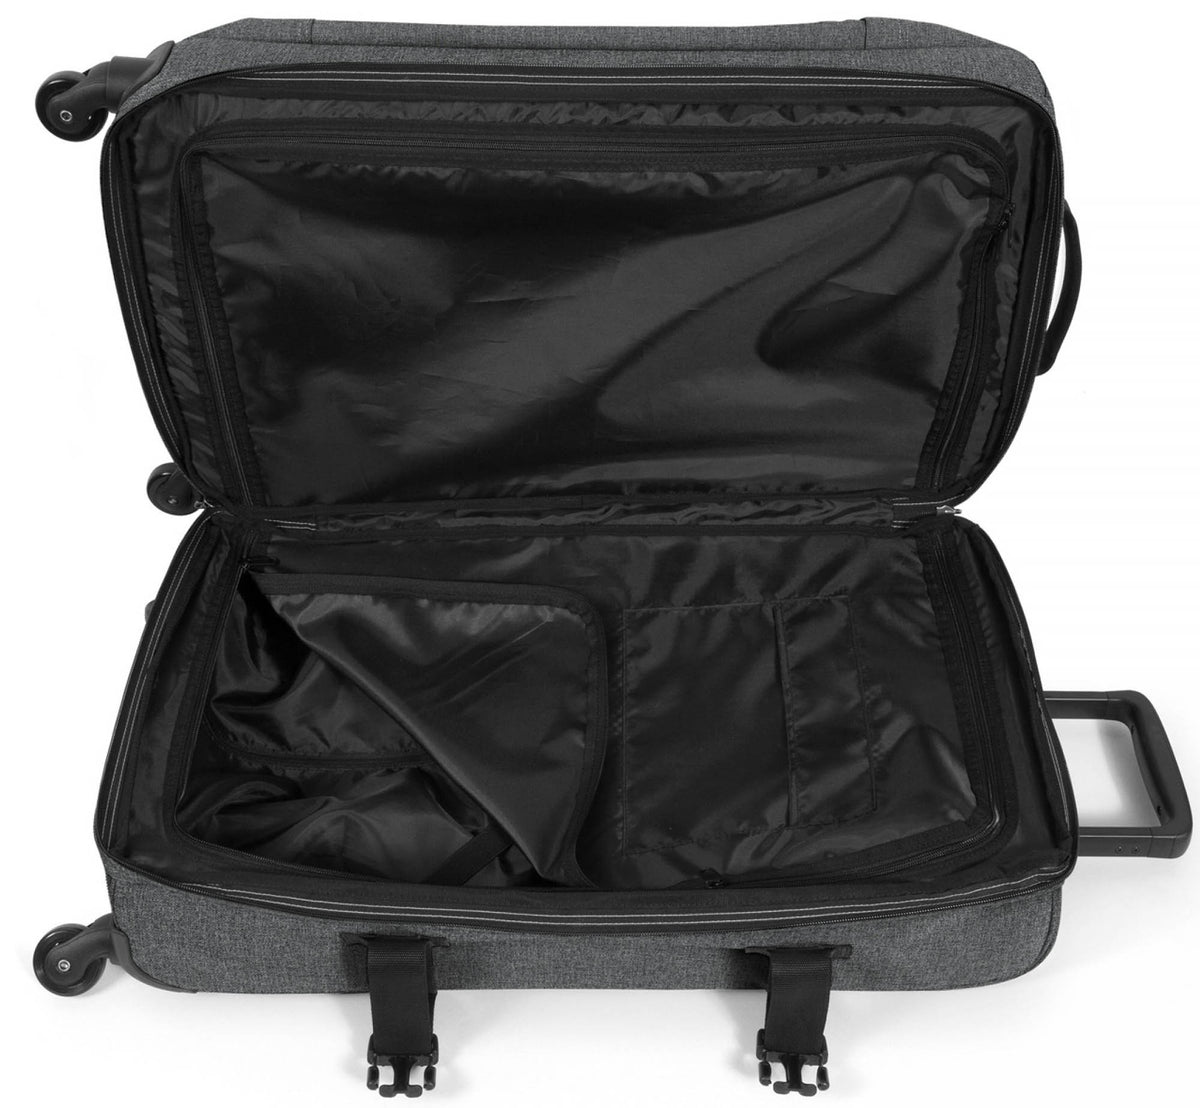 Eastpak Trans4 S Suitcase - Black Denim